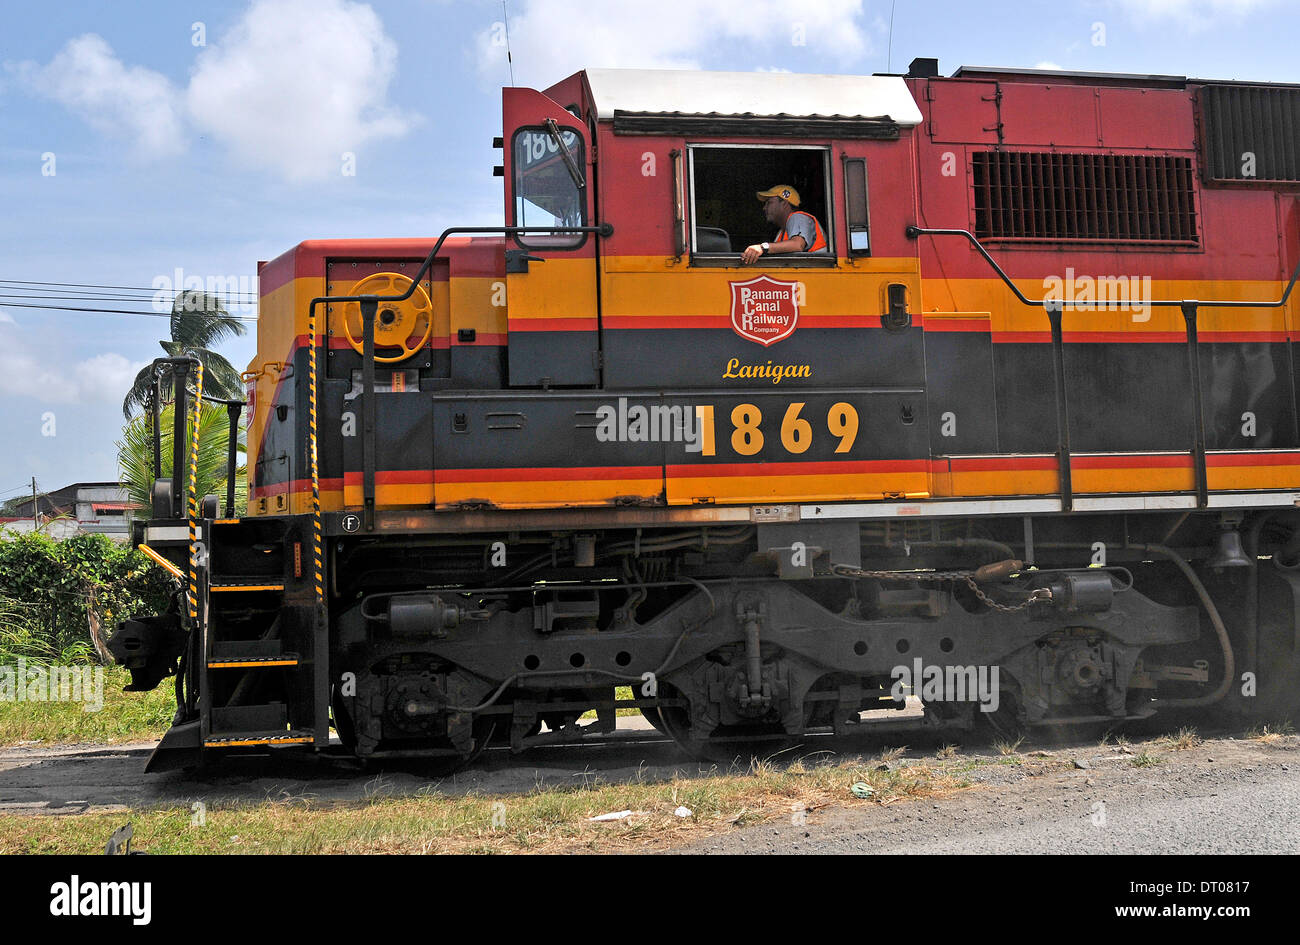 Panama canal railway company train Colon Panama Stock Photo